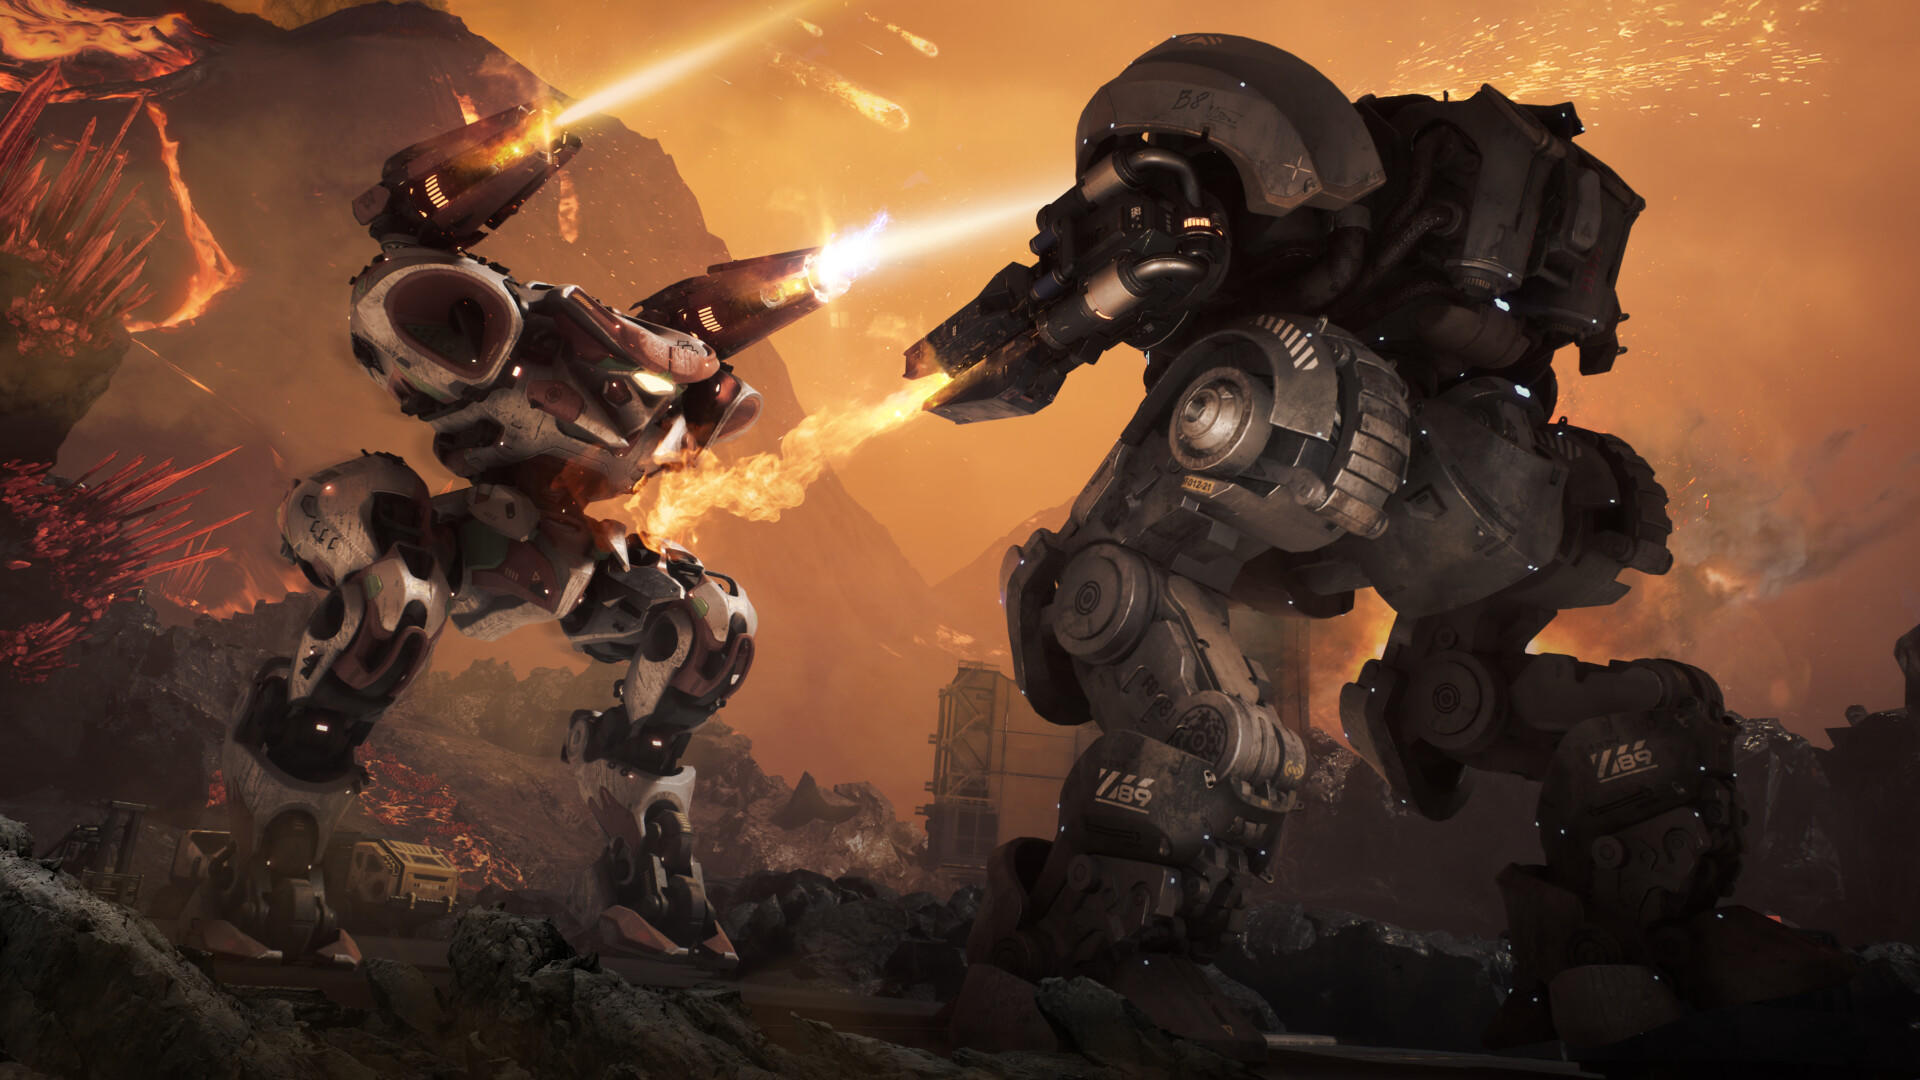 War Robots: Frontiers ภาพหน้าจอเกม